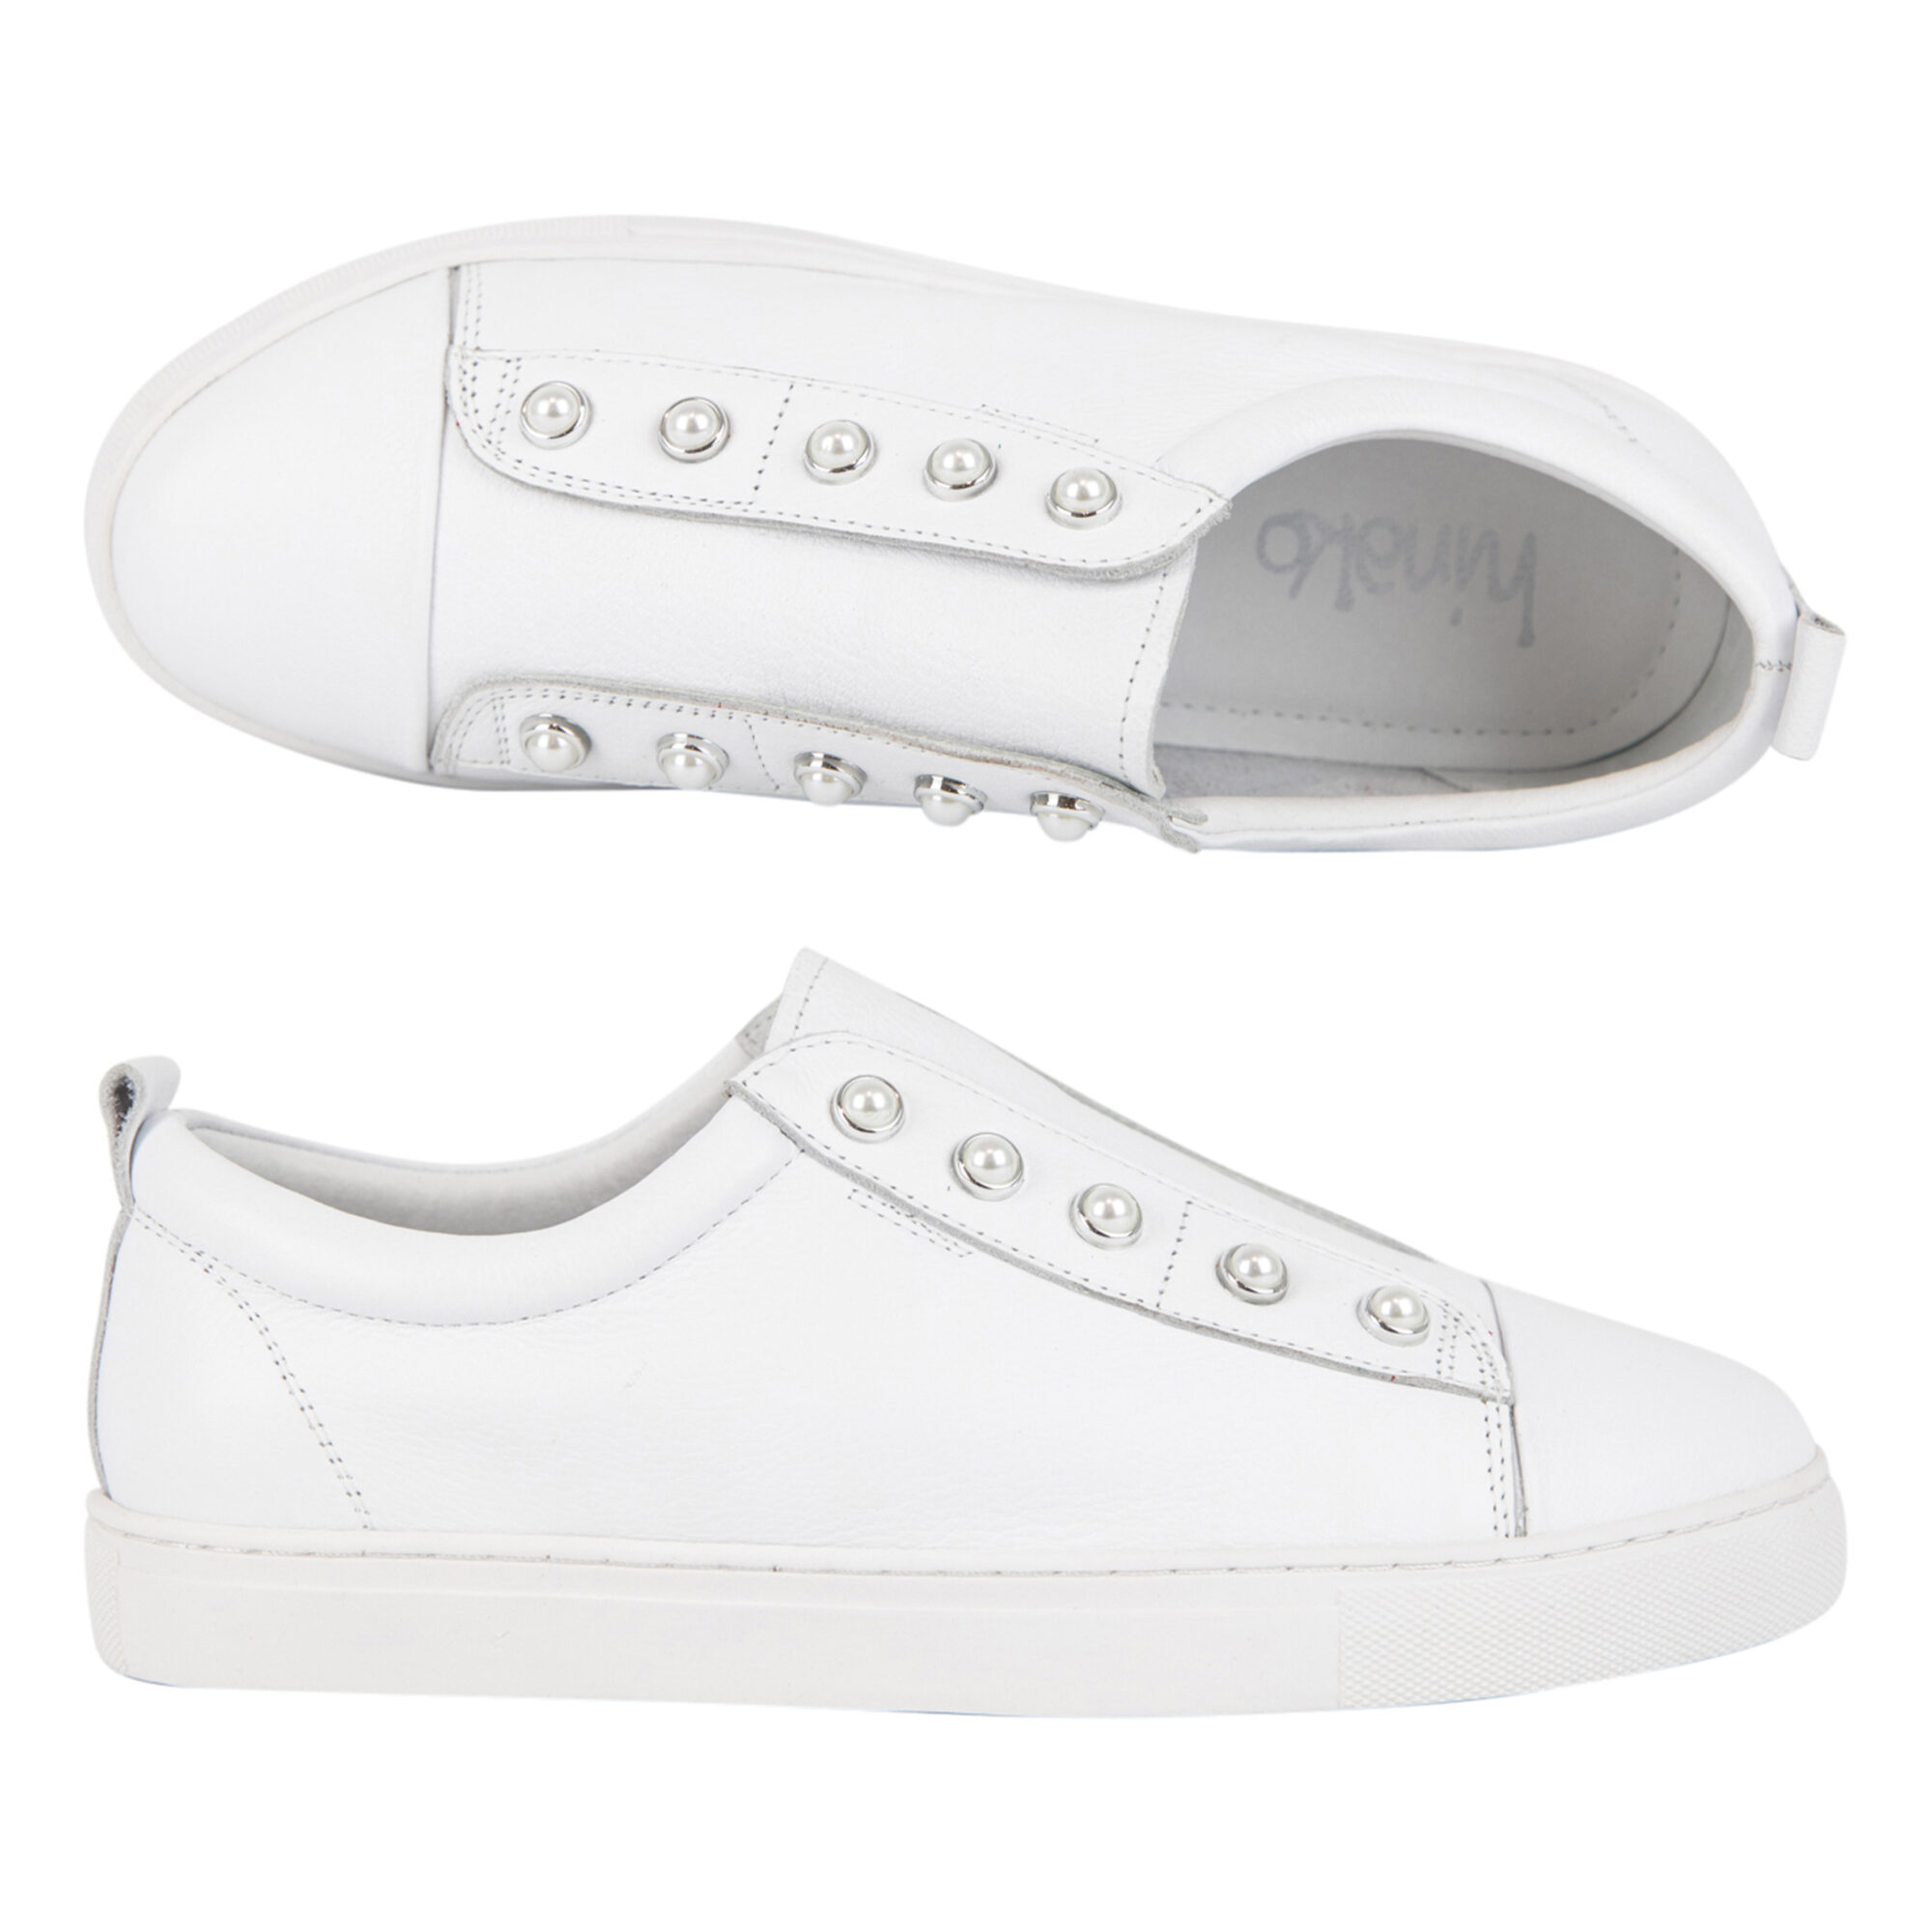 Pearl - Pure White - The Shoe Collective